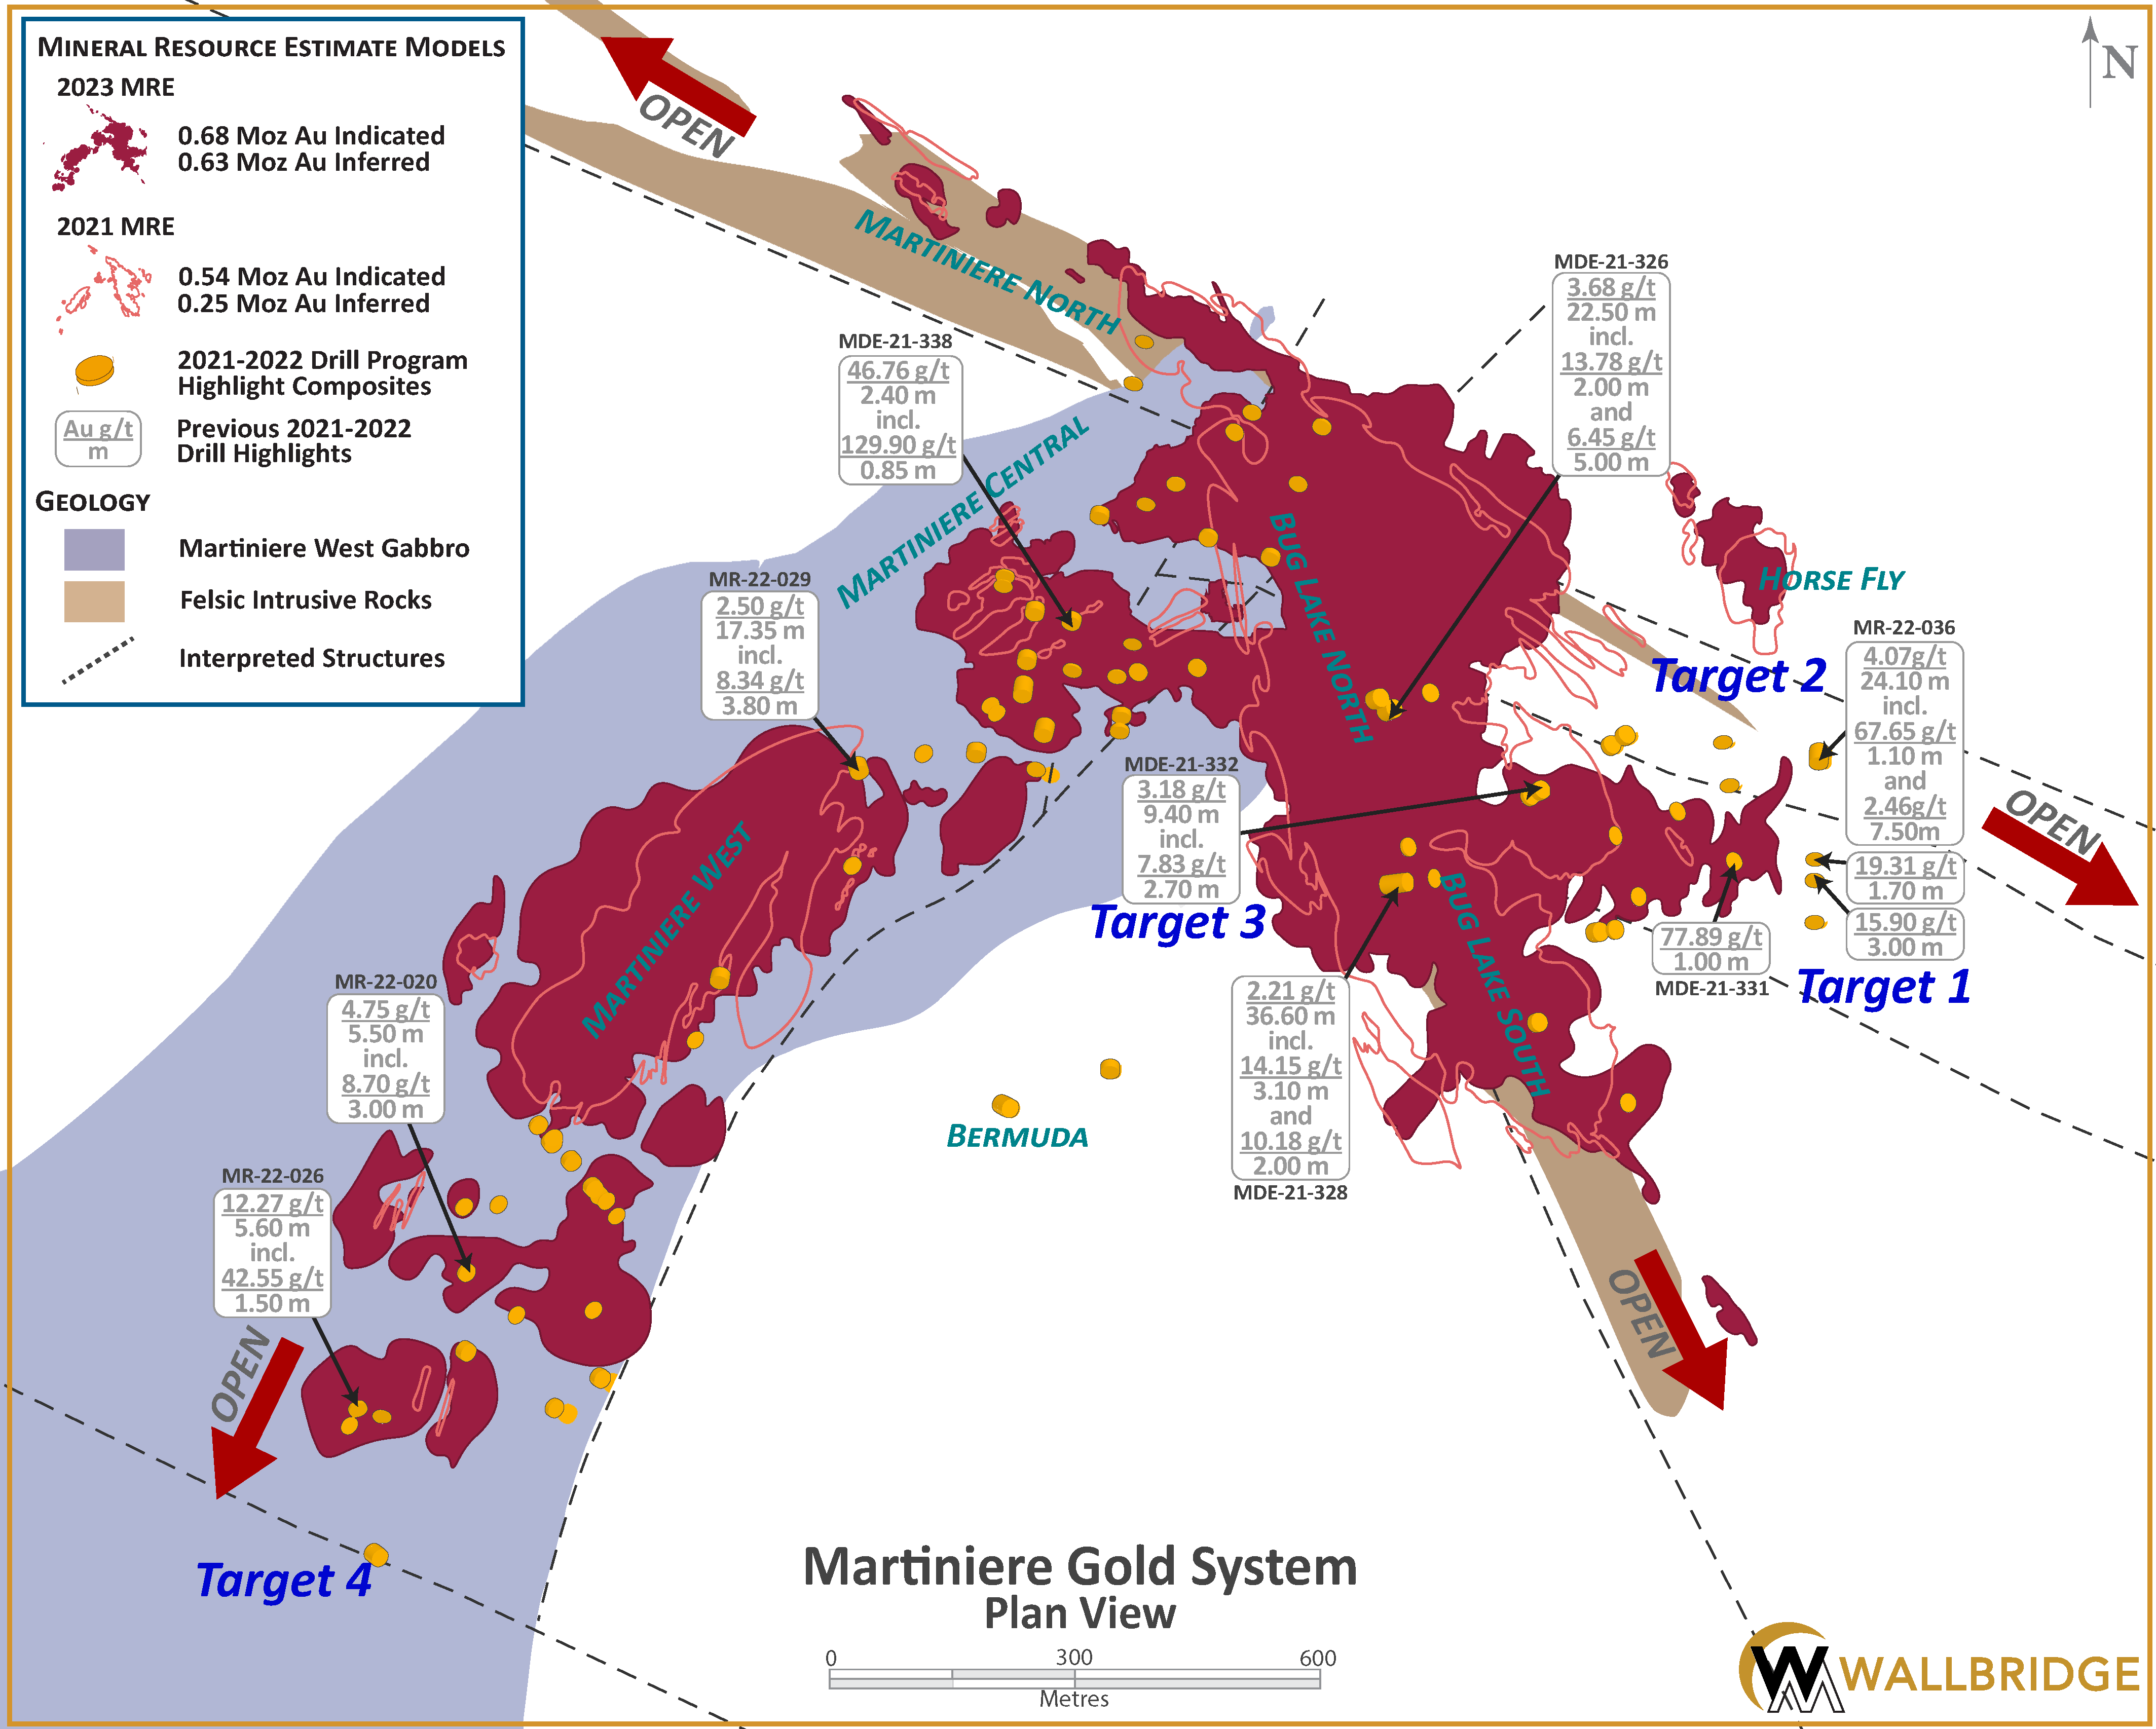 Martiniere Gold Deposit Area, Plan View